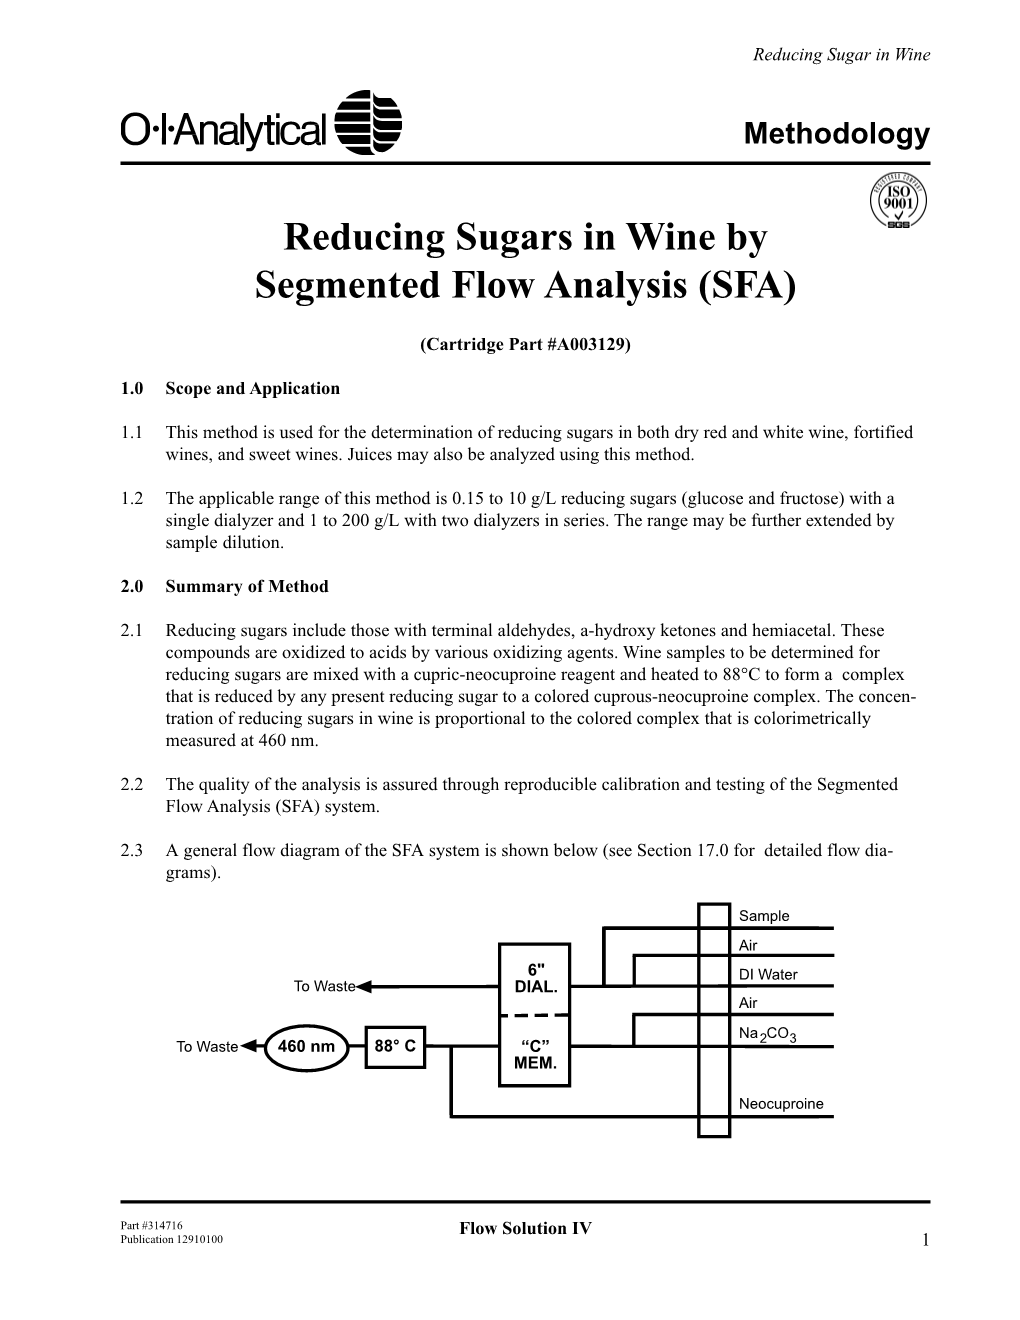 Reducing Sugars in Wine by Segmented Flow Analysis (SFA)